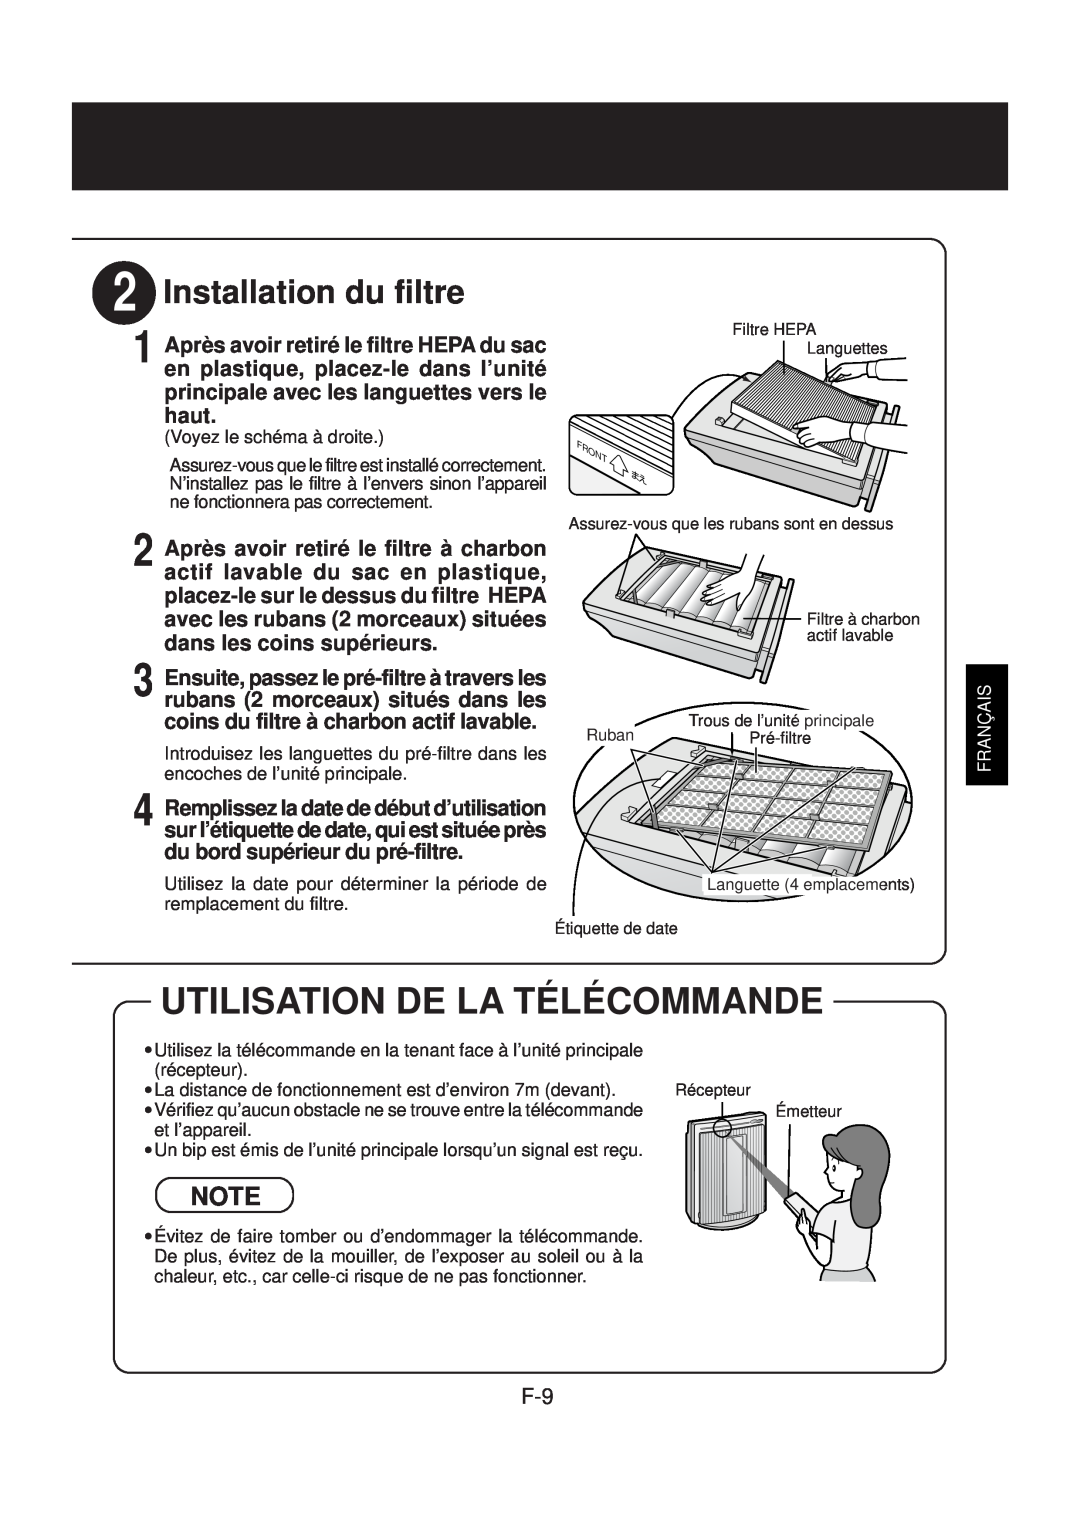 Sharp FP-N40CX operation manual Utilisation De La Télécommande, Installation du filtre 